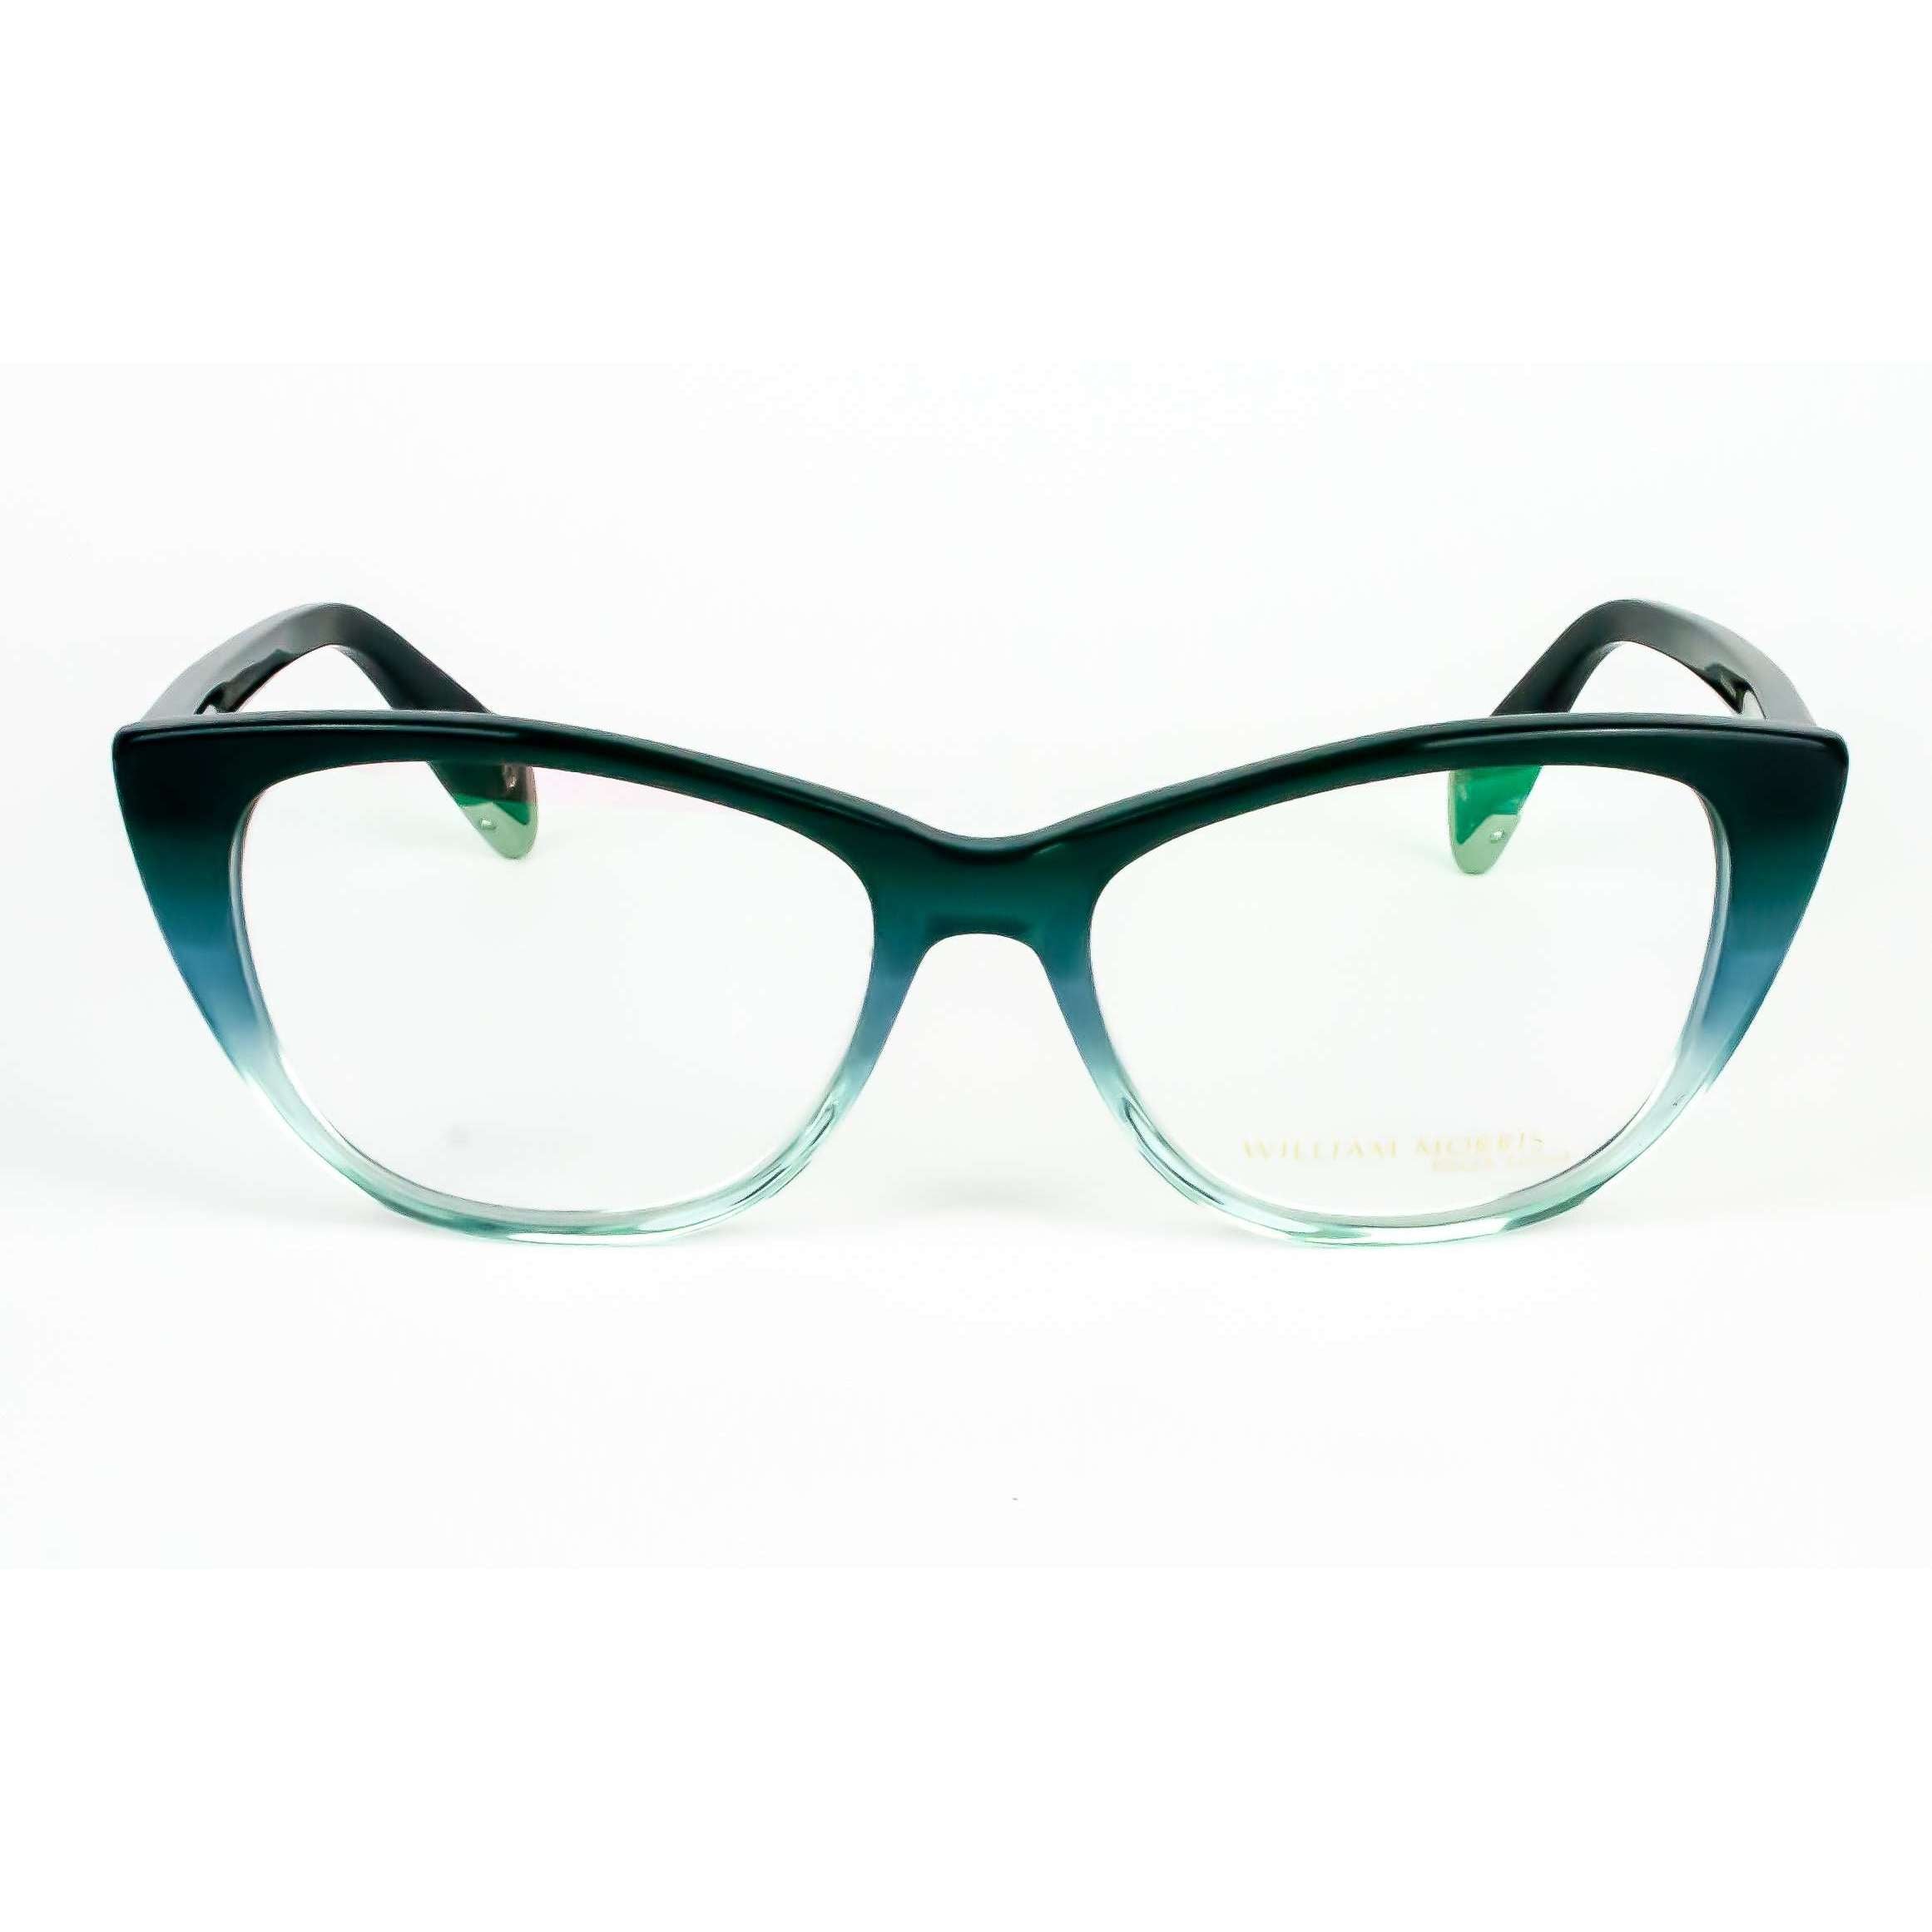 William Morris Black Label Model BL033 Cat Eye Teal Glasses